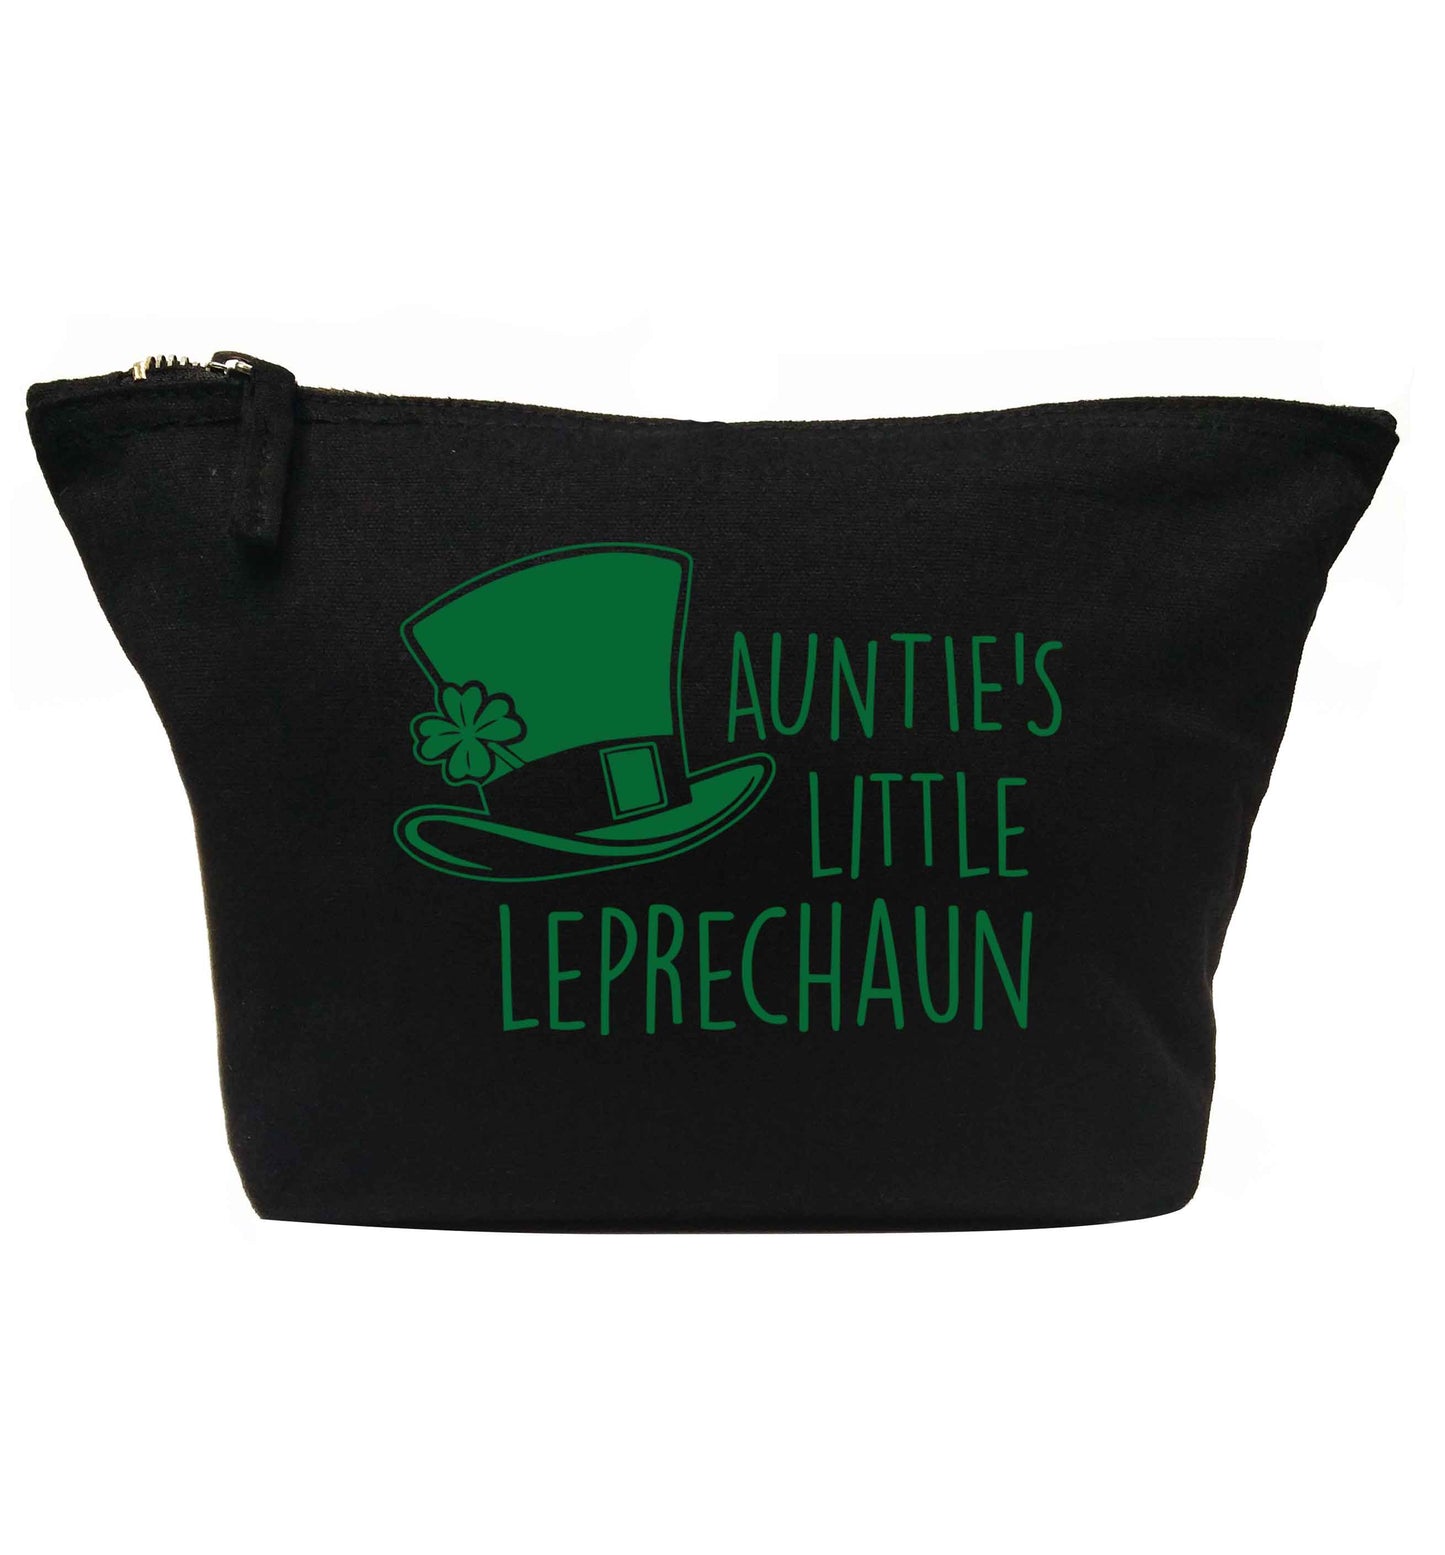 Auntie's little leprechaun | Makeup / wash bag